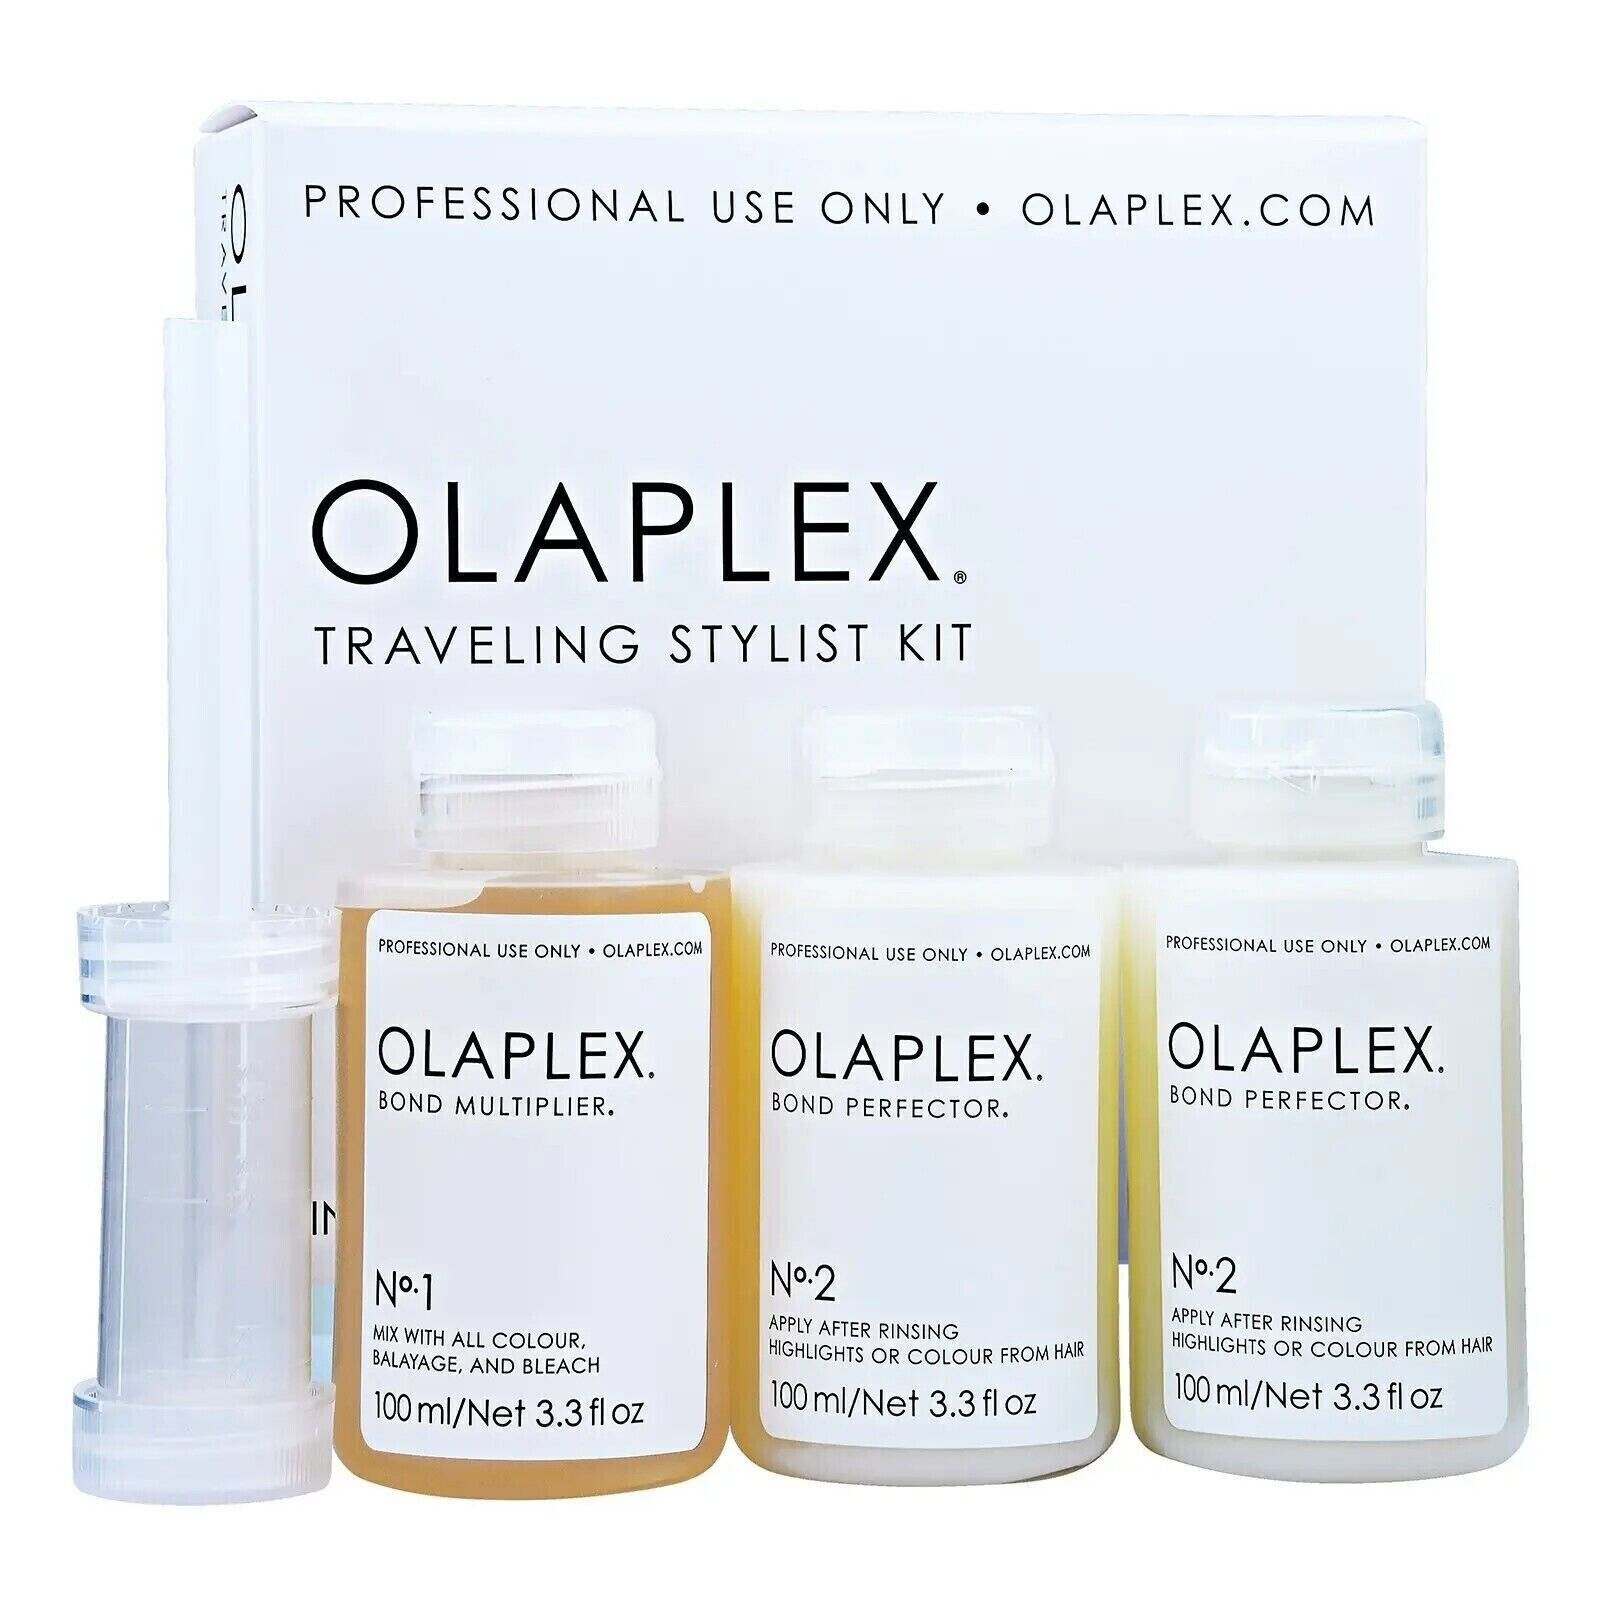 Olaplex Traveling Stylist Kit  - $125.00